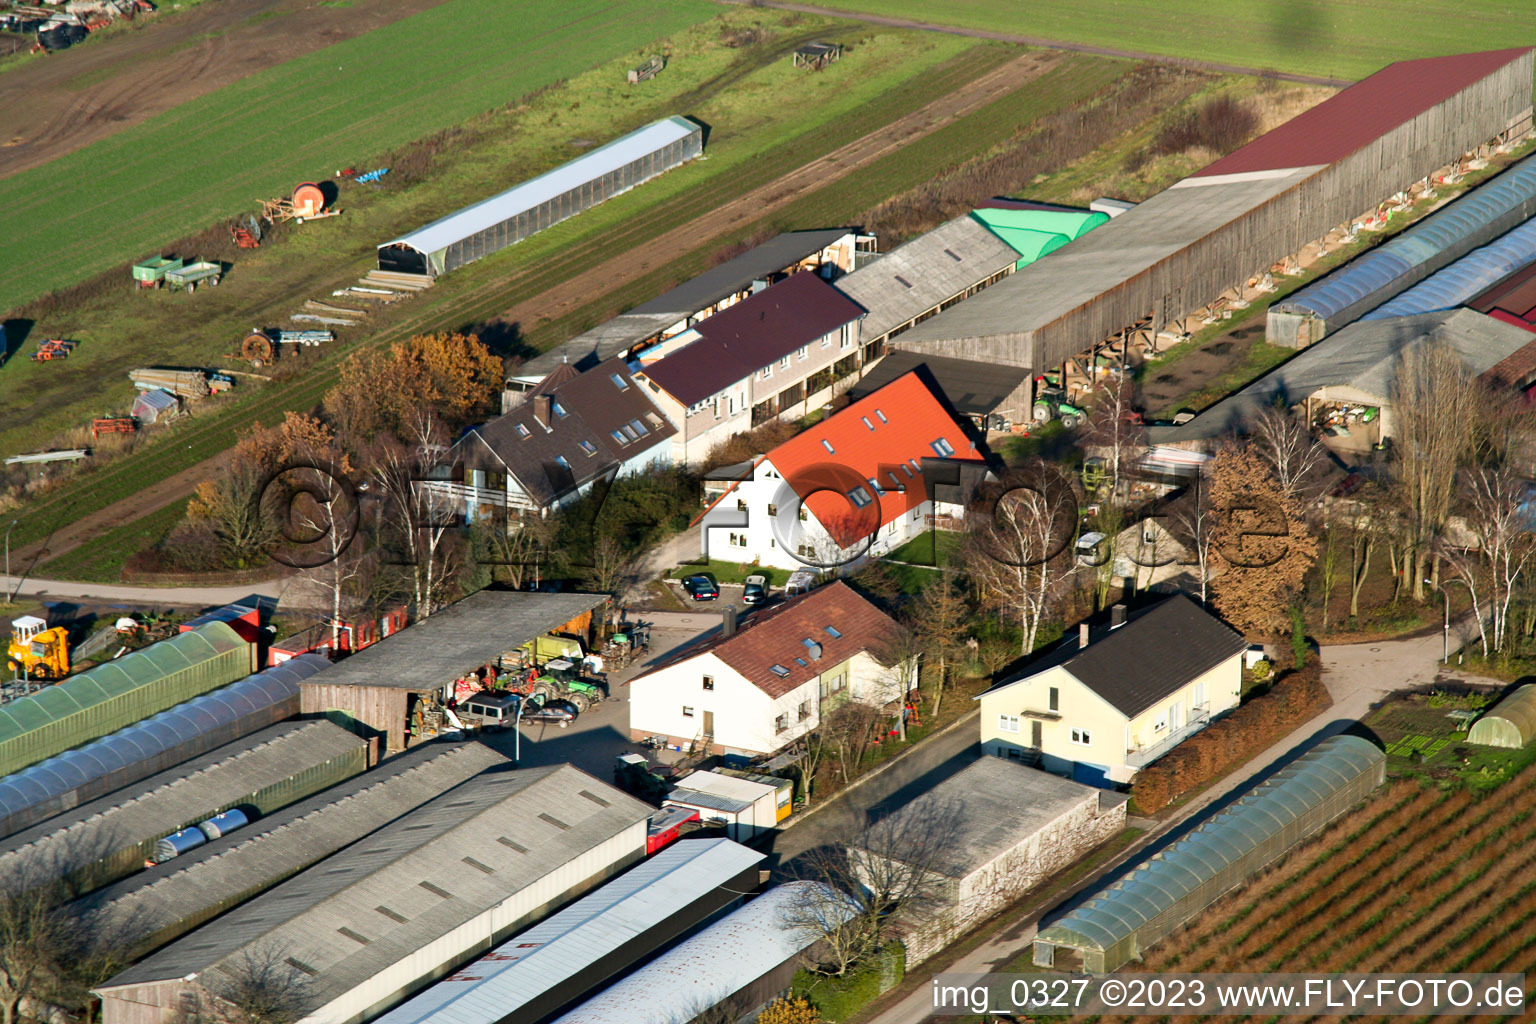 Aerial view of Ohmer Aussiedlerhof in Rheinzabern in the state Rhineland-Palatinate, Germany